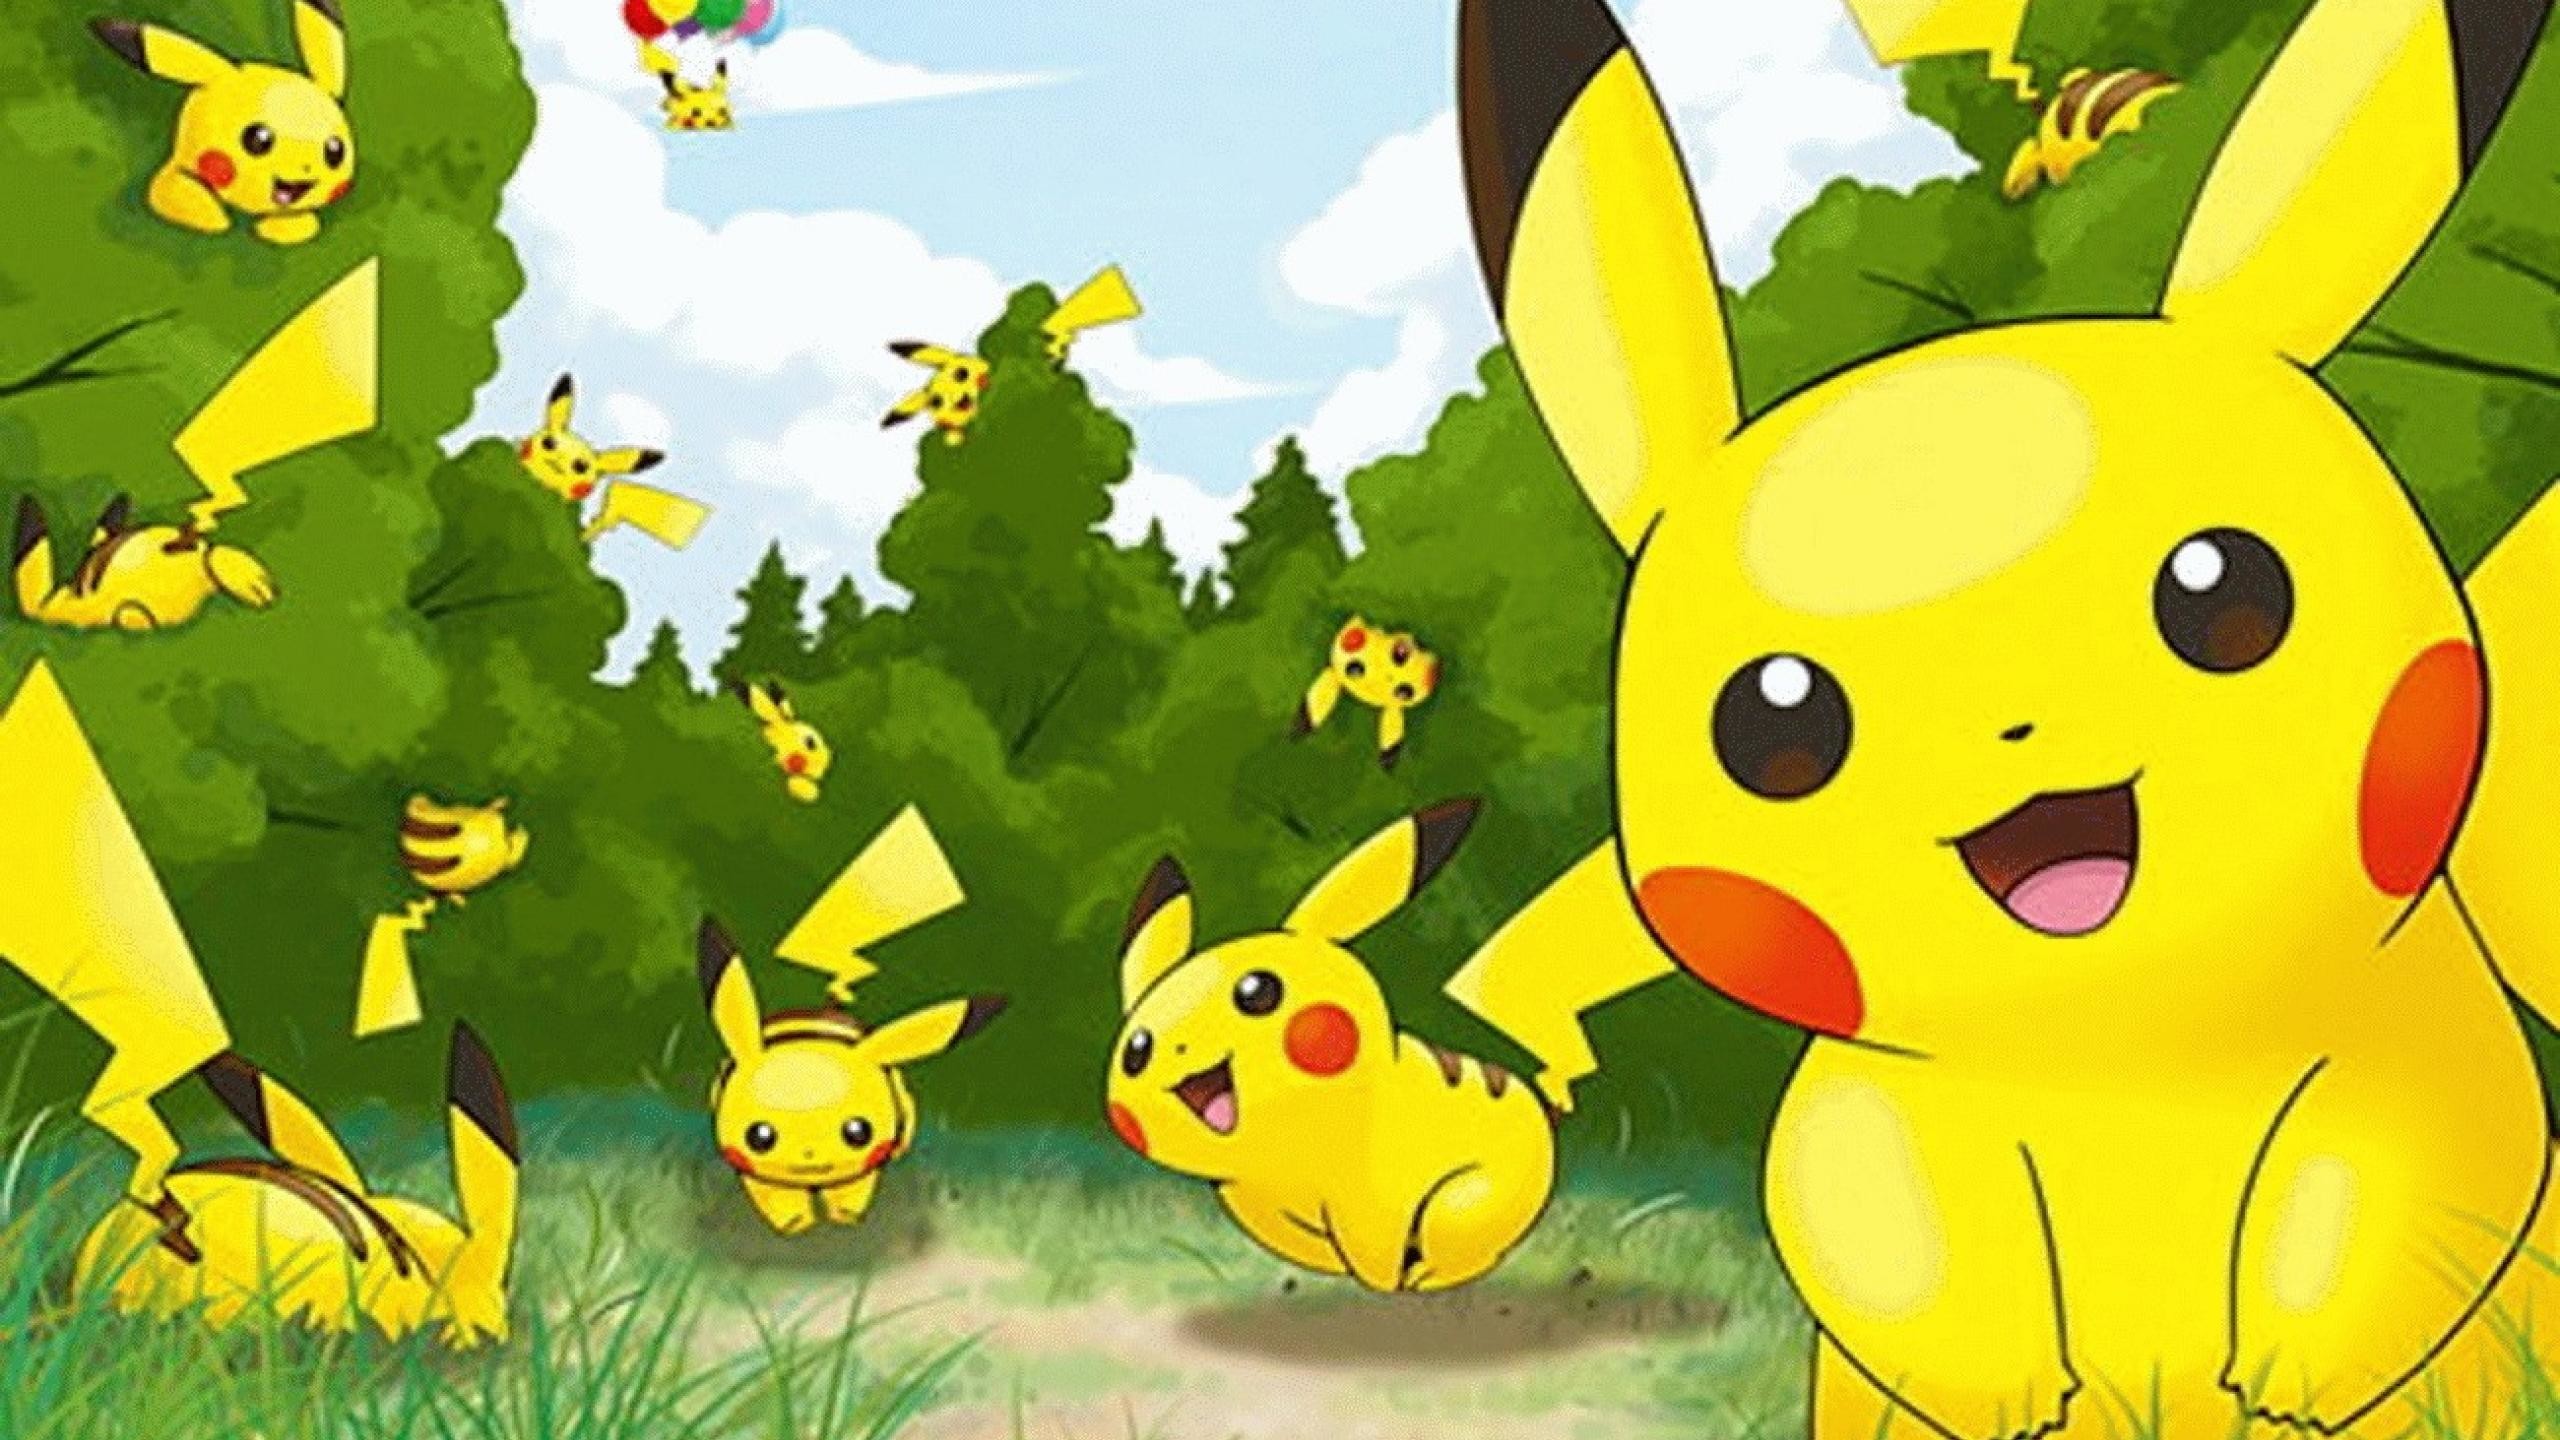 Pokemon wallpaper hd pikachu id 18095 / Source